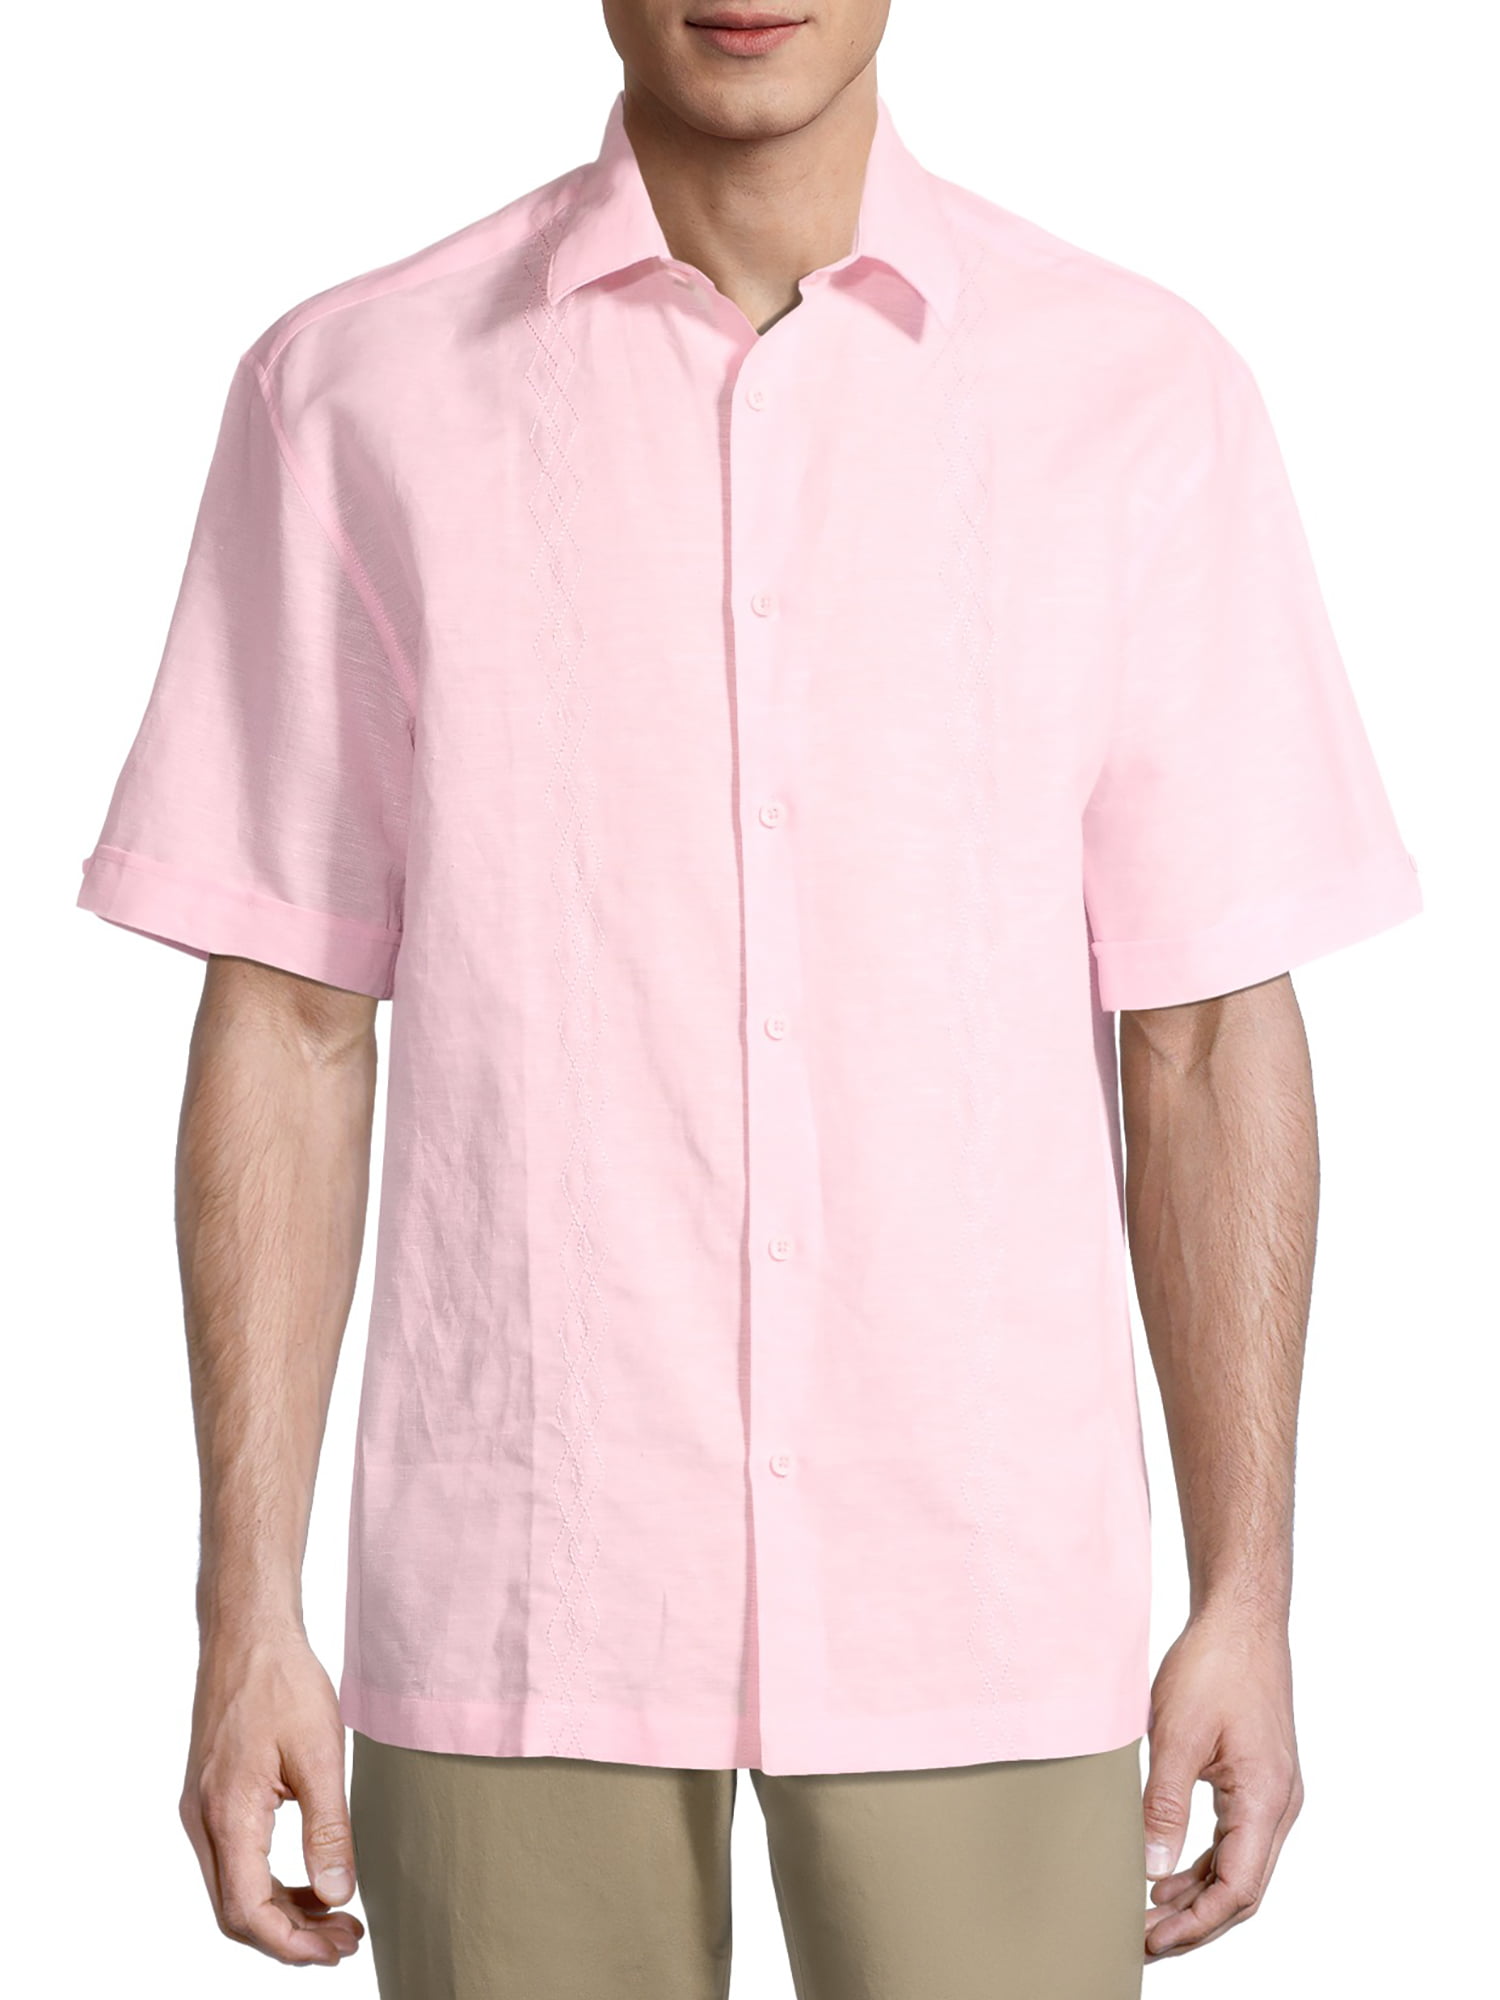 Cafe Luna Short Sleeve Regular Polyester Button-Up Shirt (Men's) 1 Pack ...